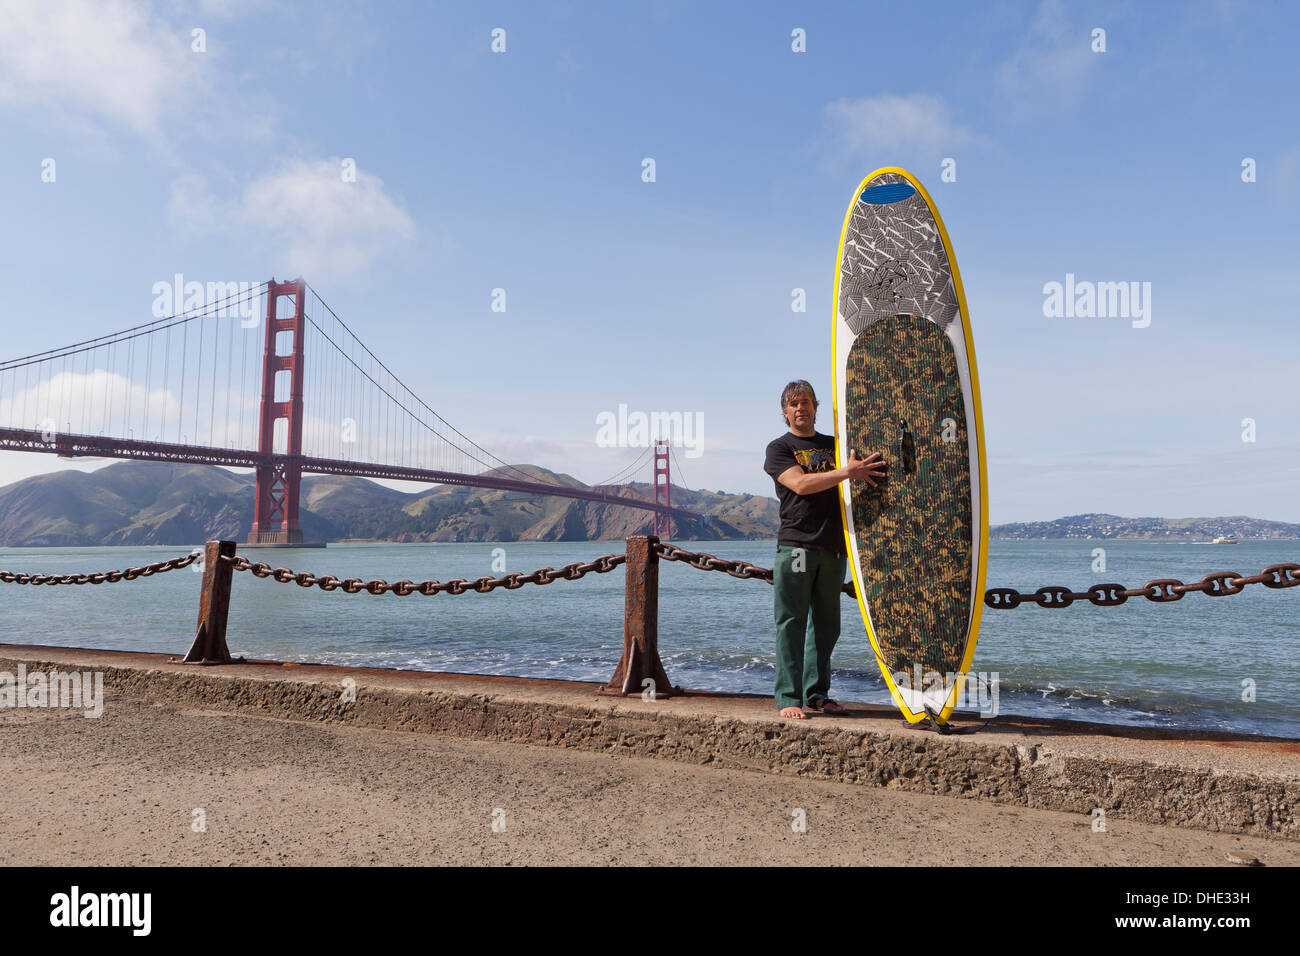 Paddleboard Surfer holding Board - San Francisco, Kalifornien, USA Stockfoto